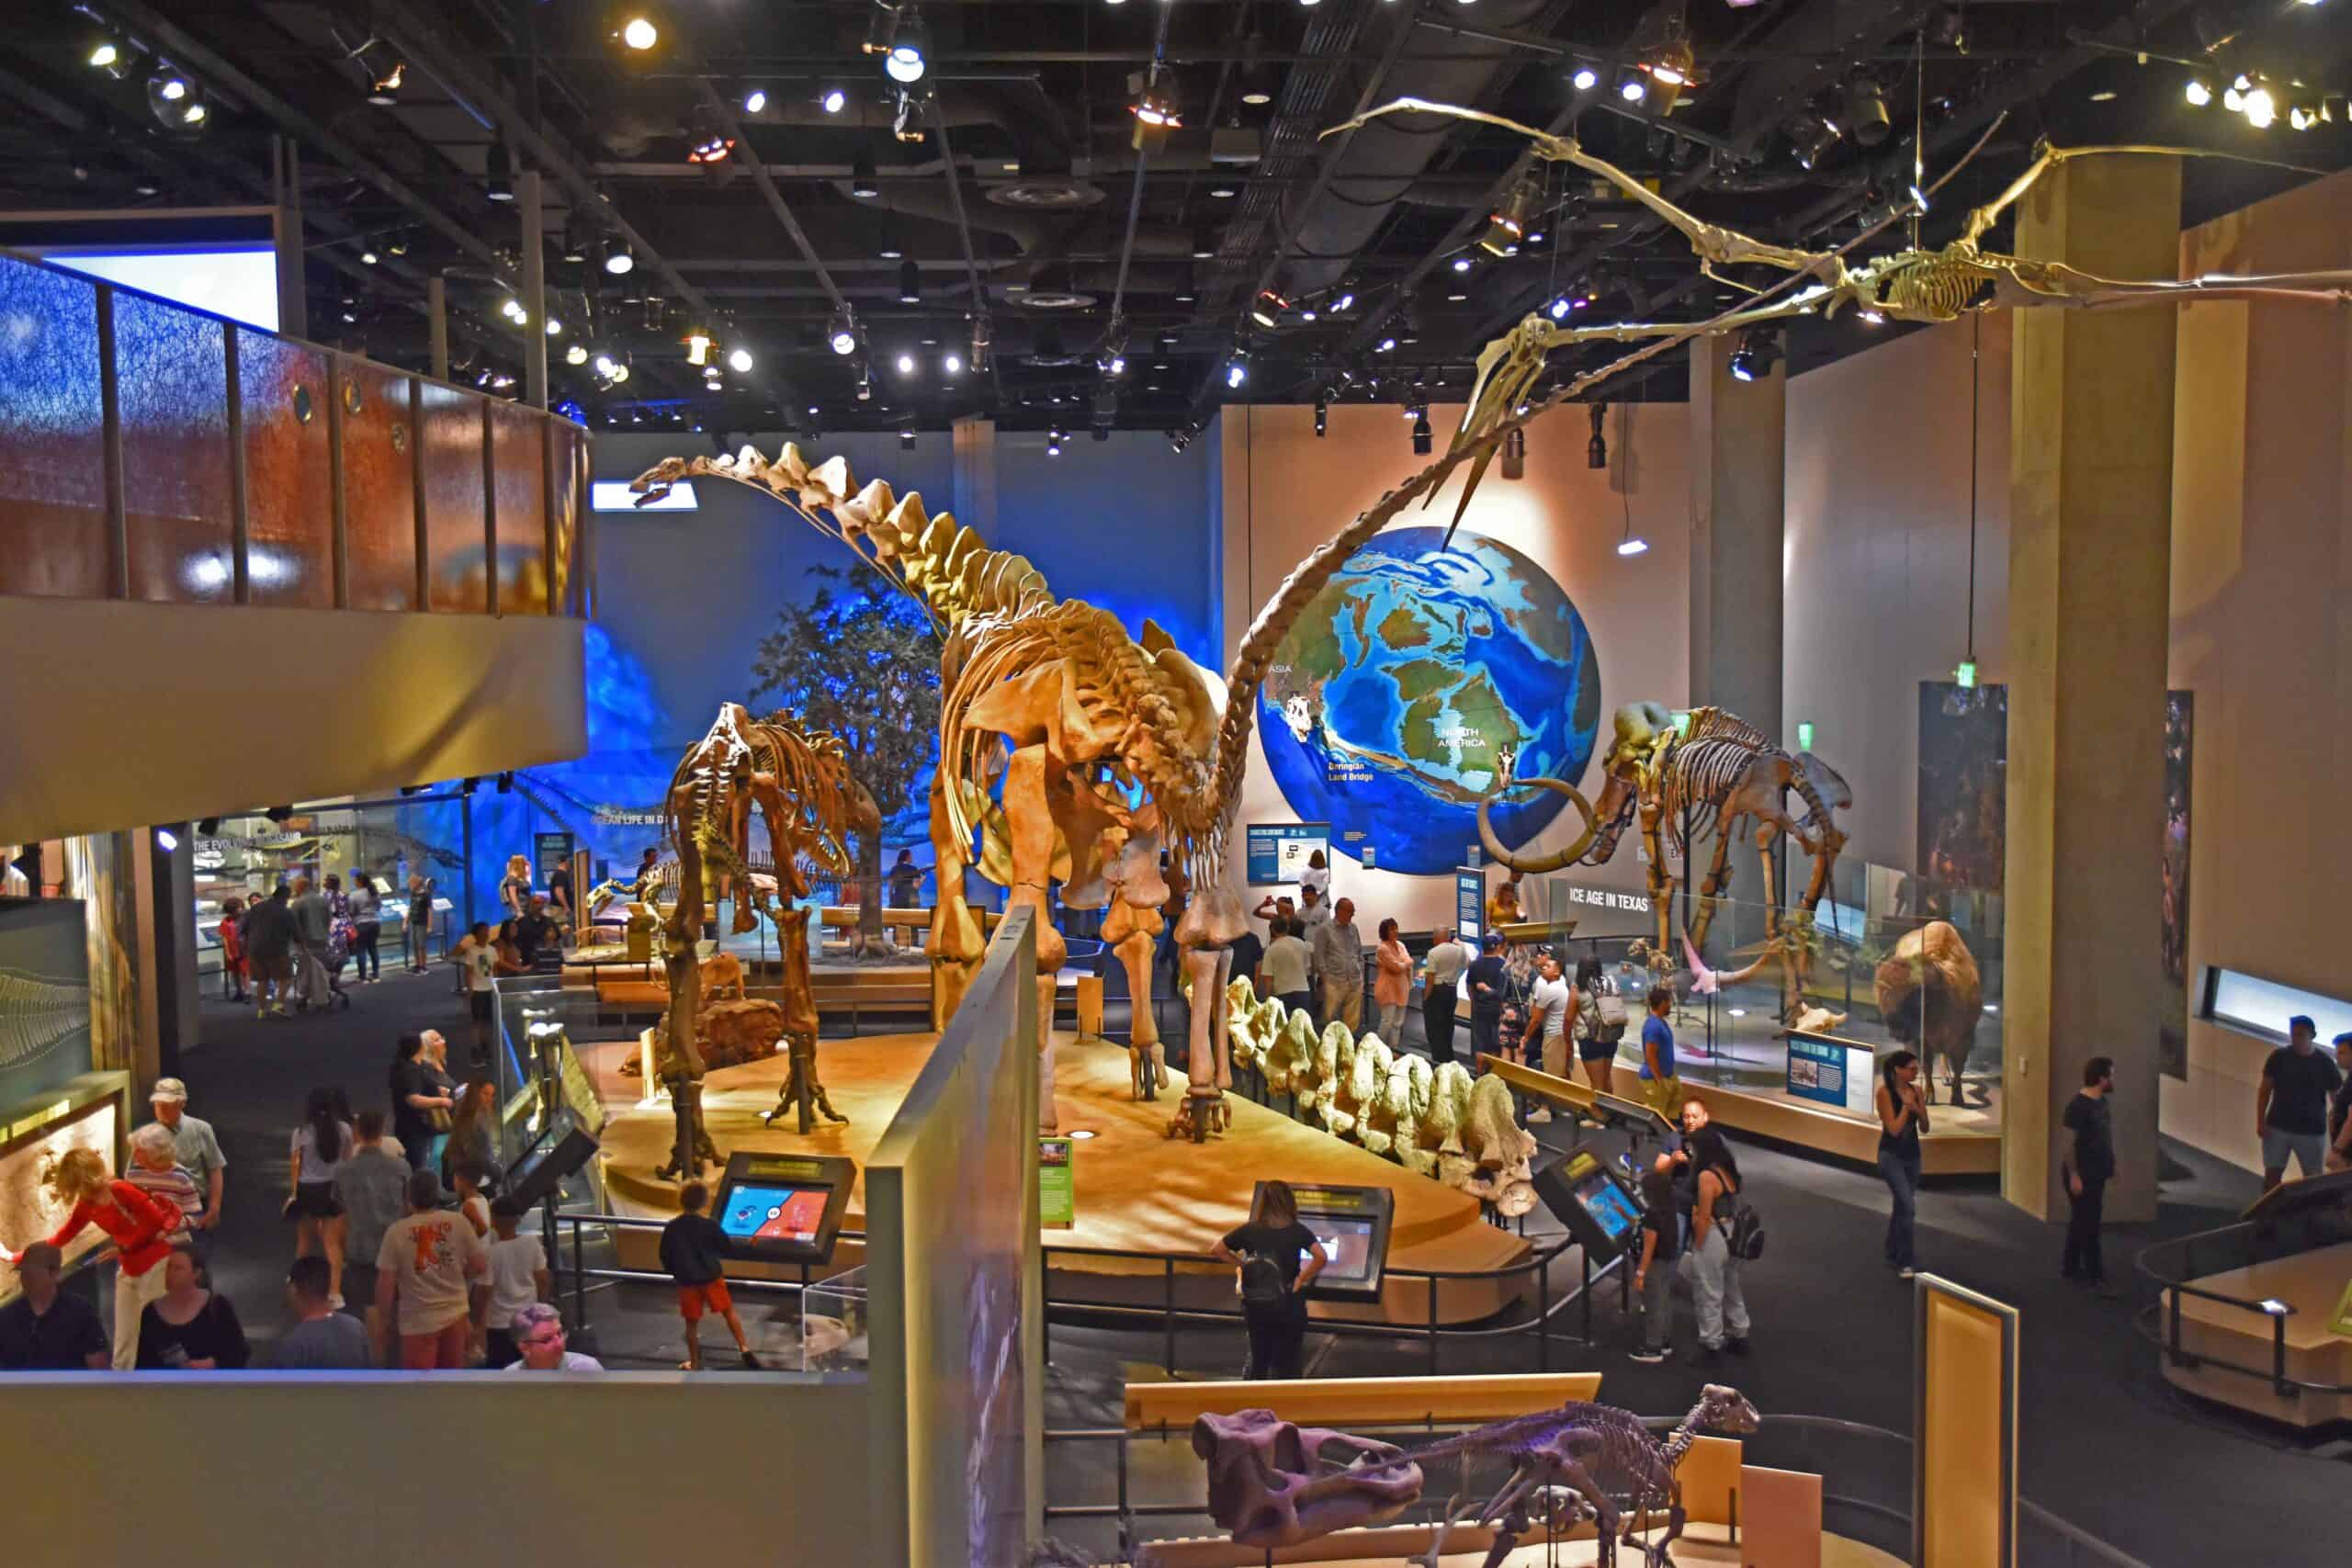 The Pirot Museum has an amazing dinosaur exhibit.